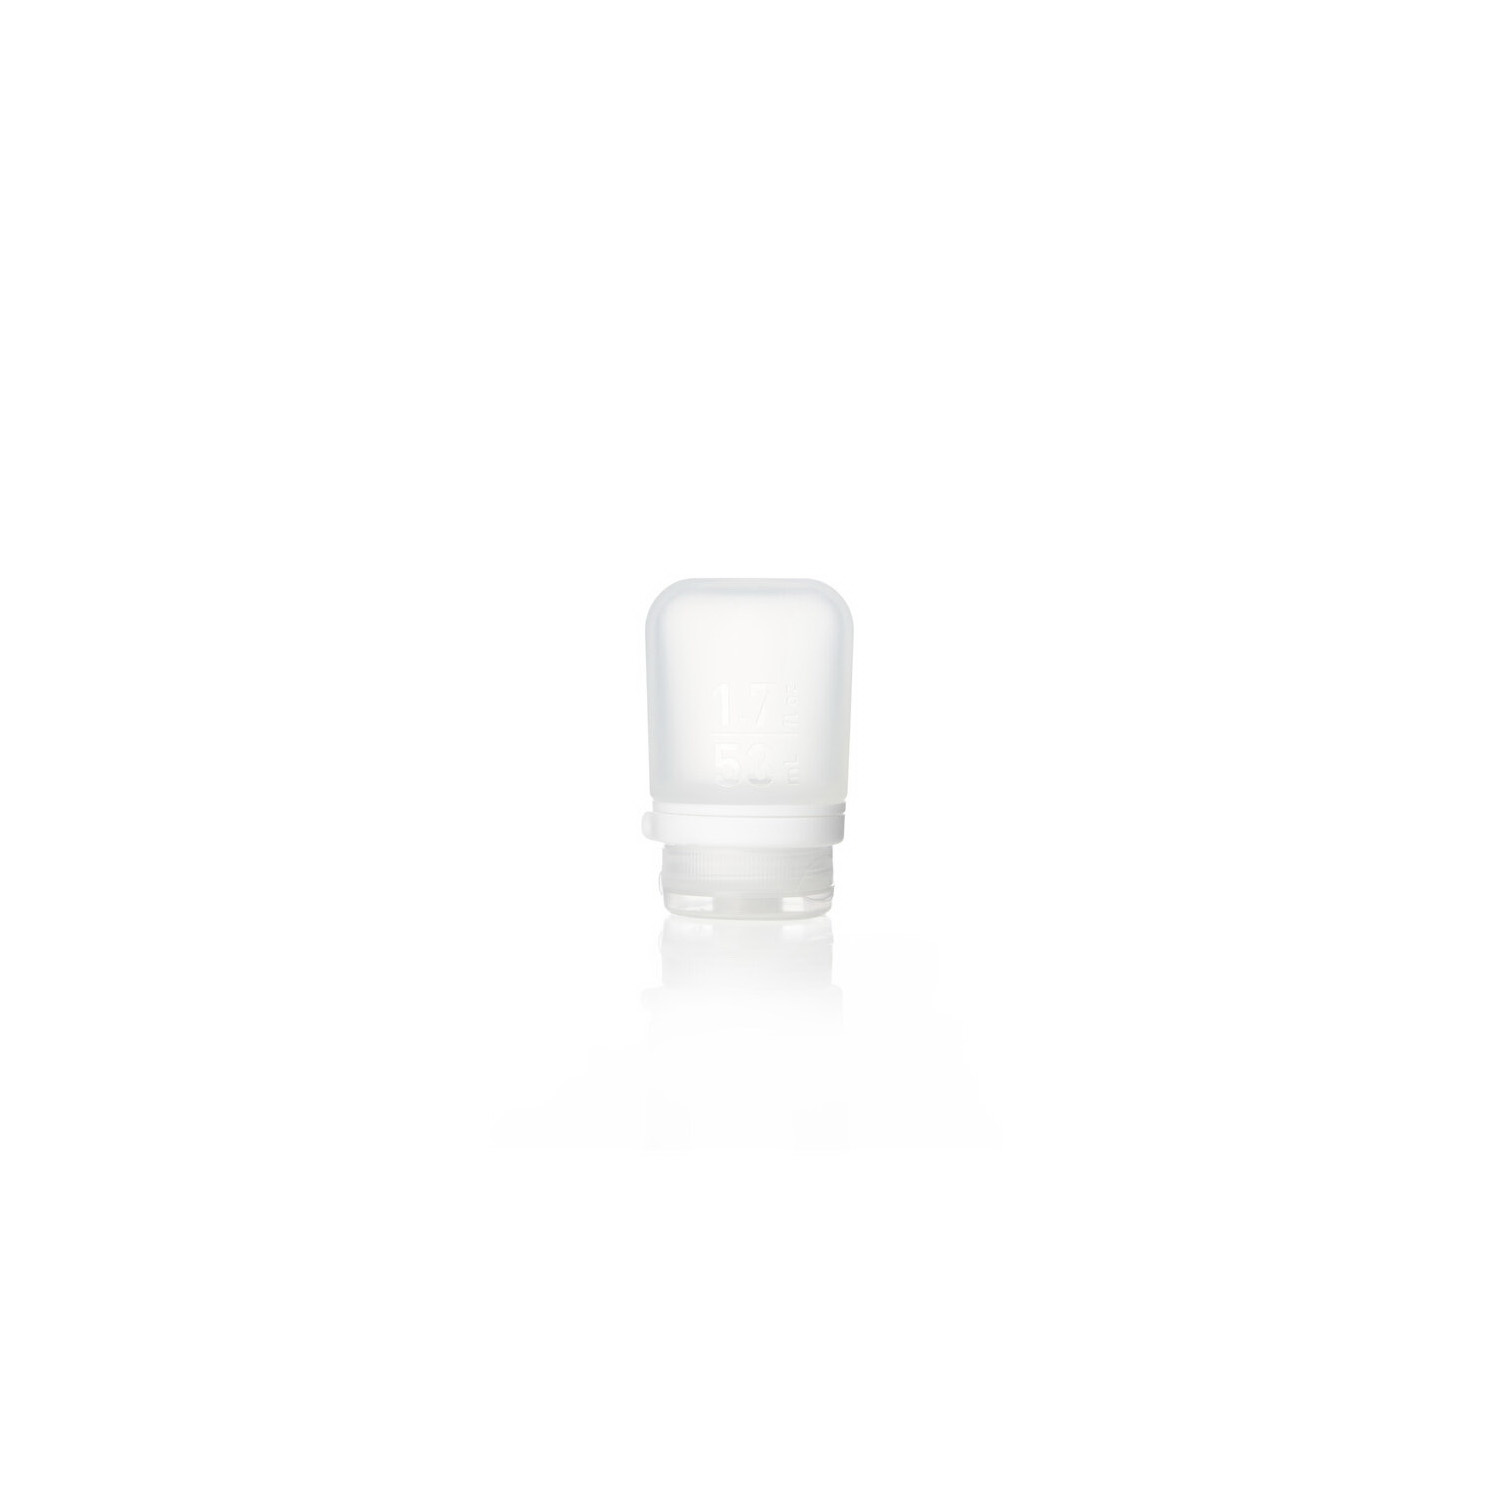 Humangear HG3101 Travel Bottle, Small, 1.7 fl-oz Capacity, Polypropylene/Silicone, Clear - 1